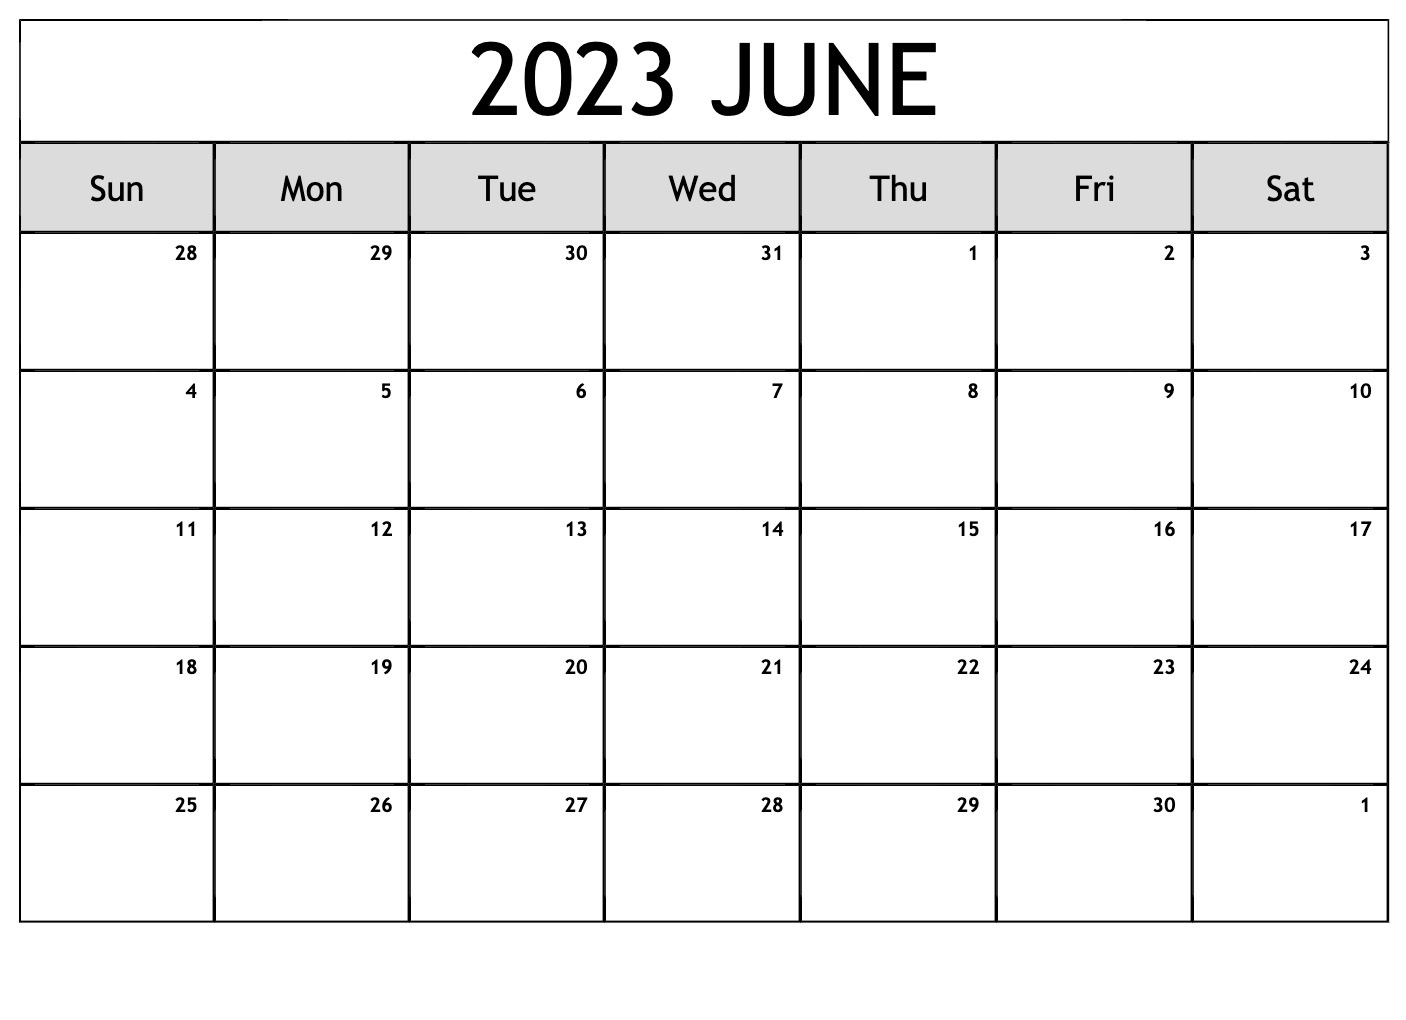 June 2023 Calendar Template